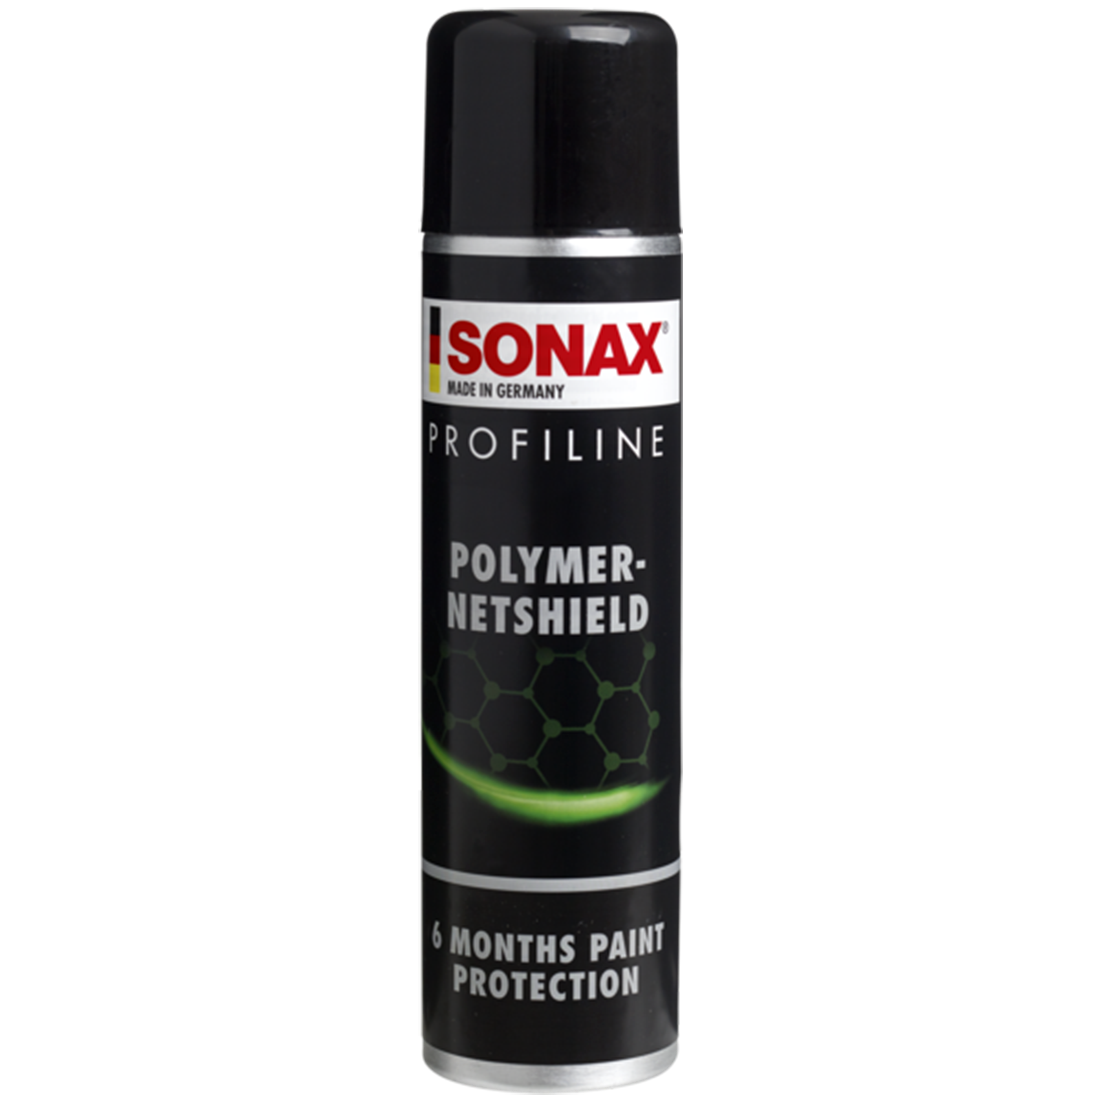 Sonax Polymer Net Shield 340mL Passion Detailing